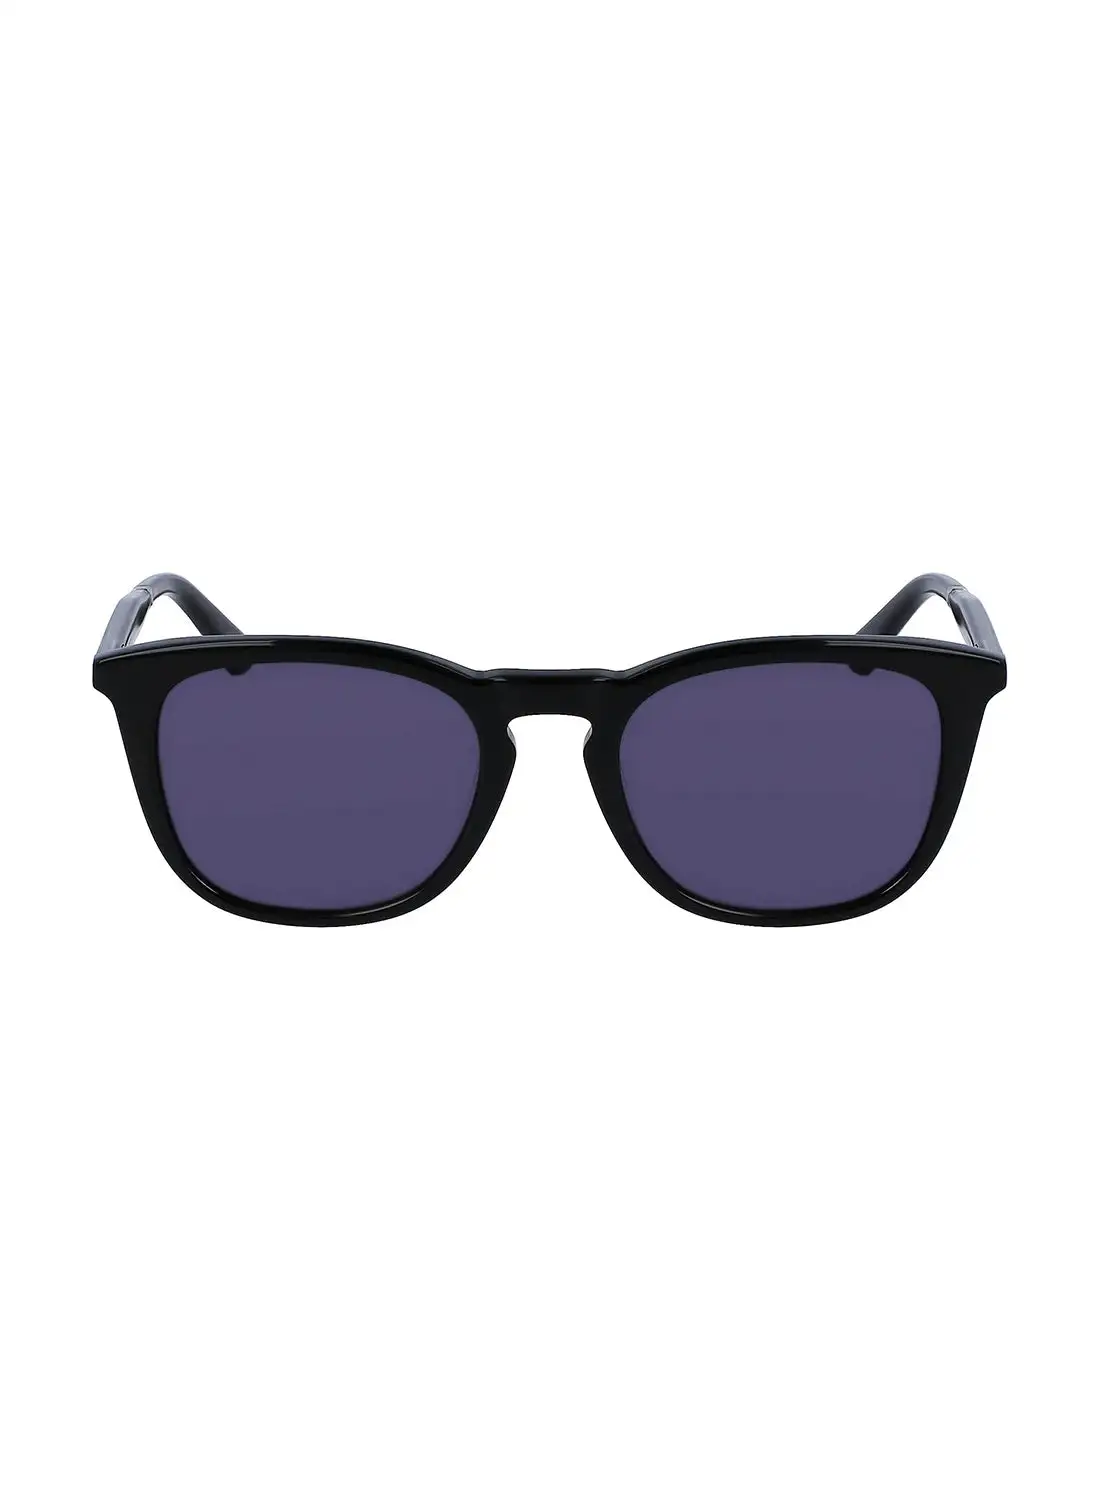 CALVIN KLEIN Unisex Sunglasses - CK23501S-001-5121 - Lens Size: 51 Mm